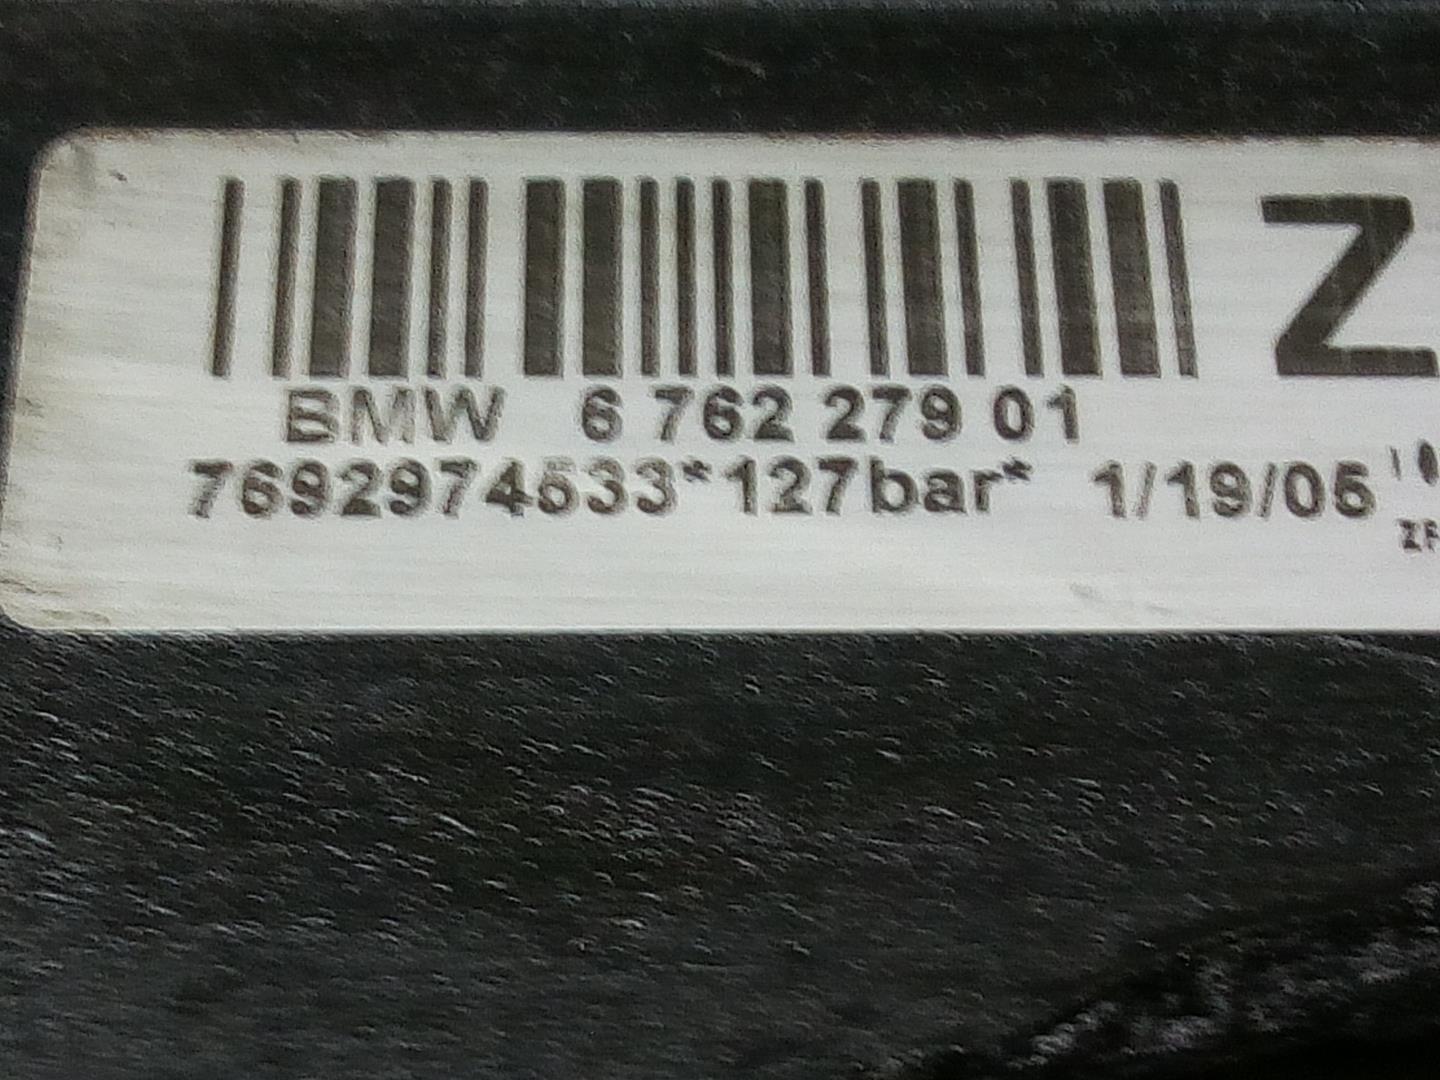 BMW X5 E53 (1999-2006) Power Steering Pump 676227901, 7692974533 18581789